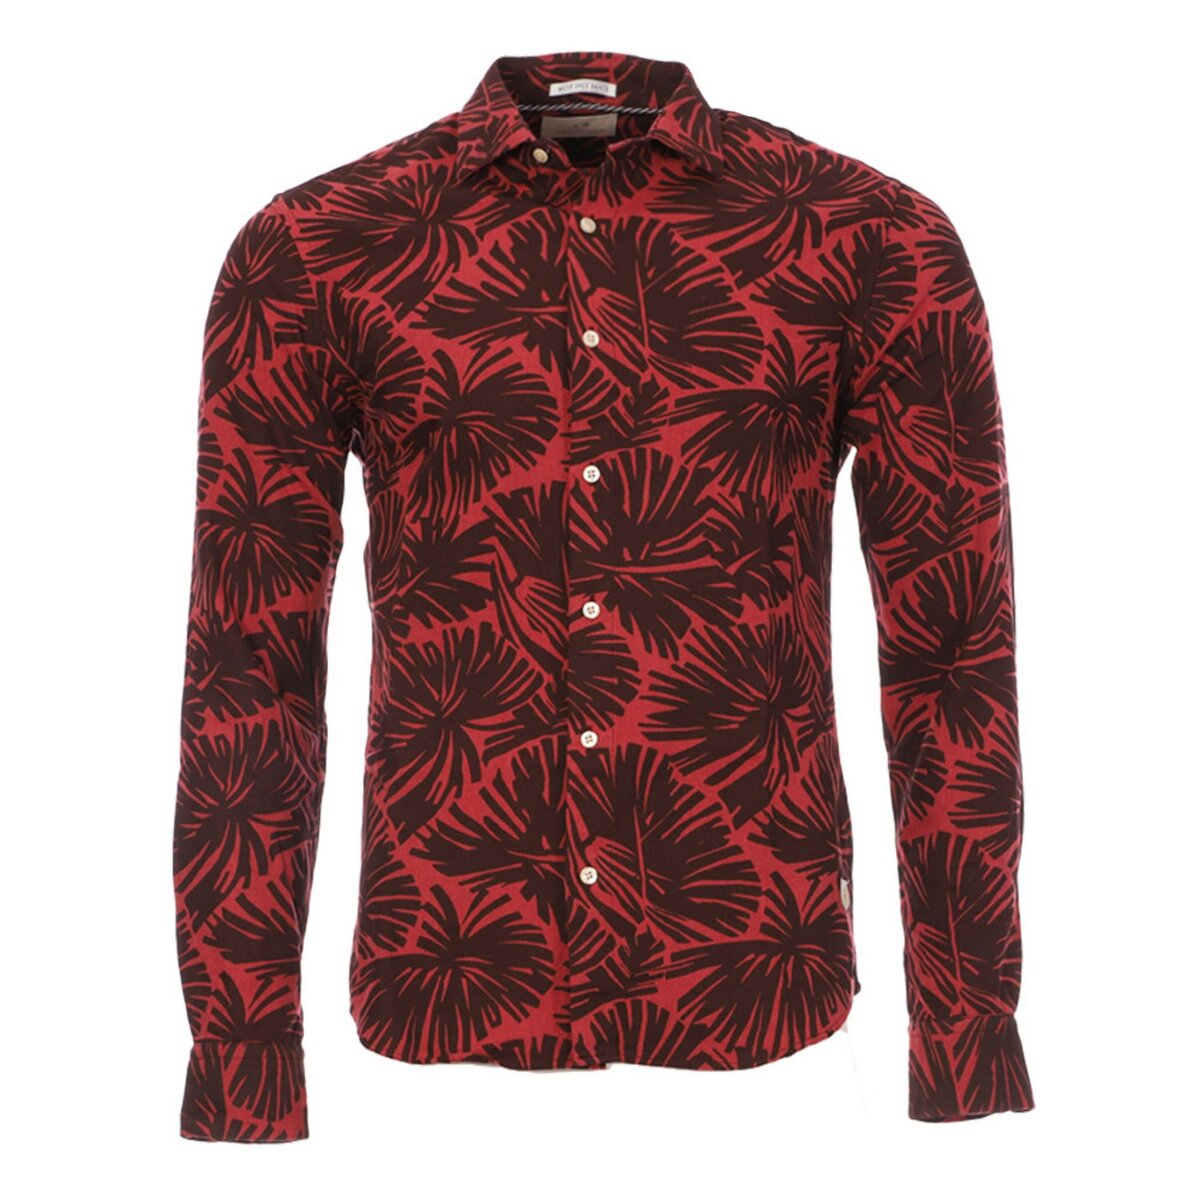  Chemise à motifs Rouge Homme Scotch & Soda Oxford